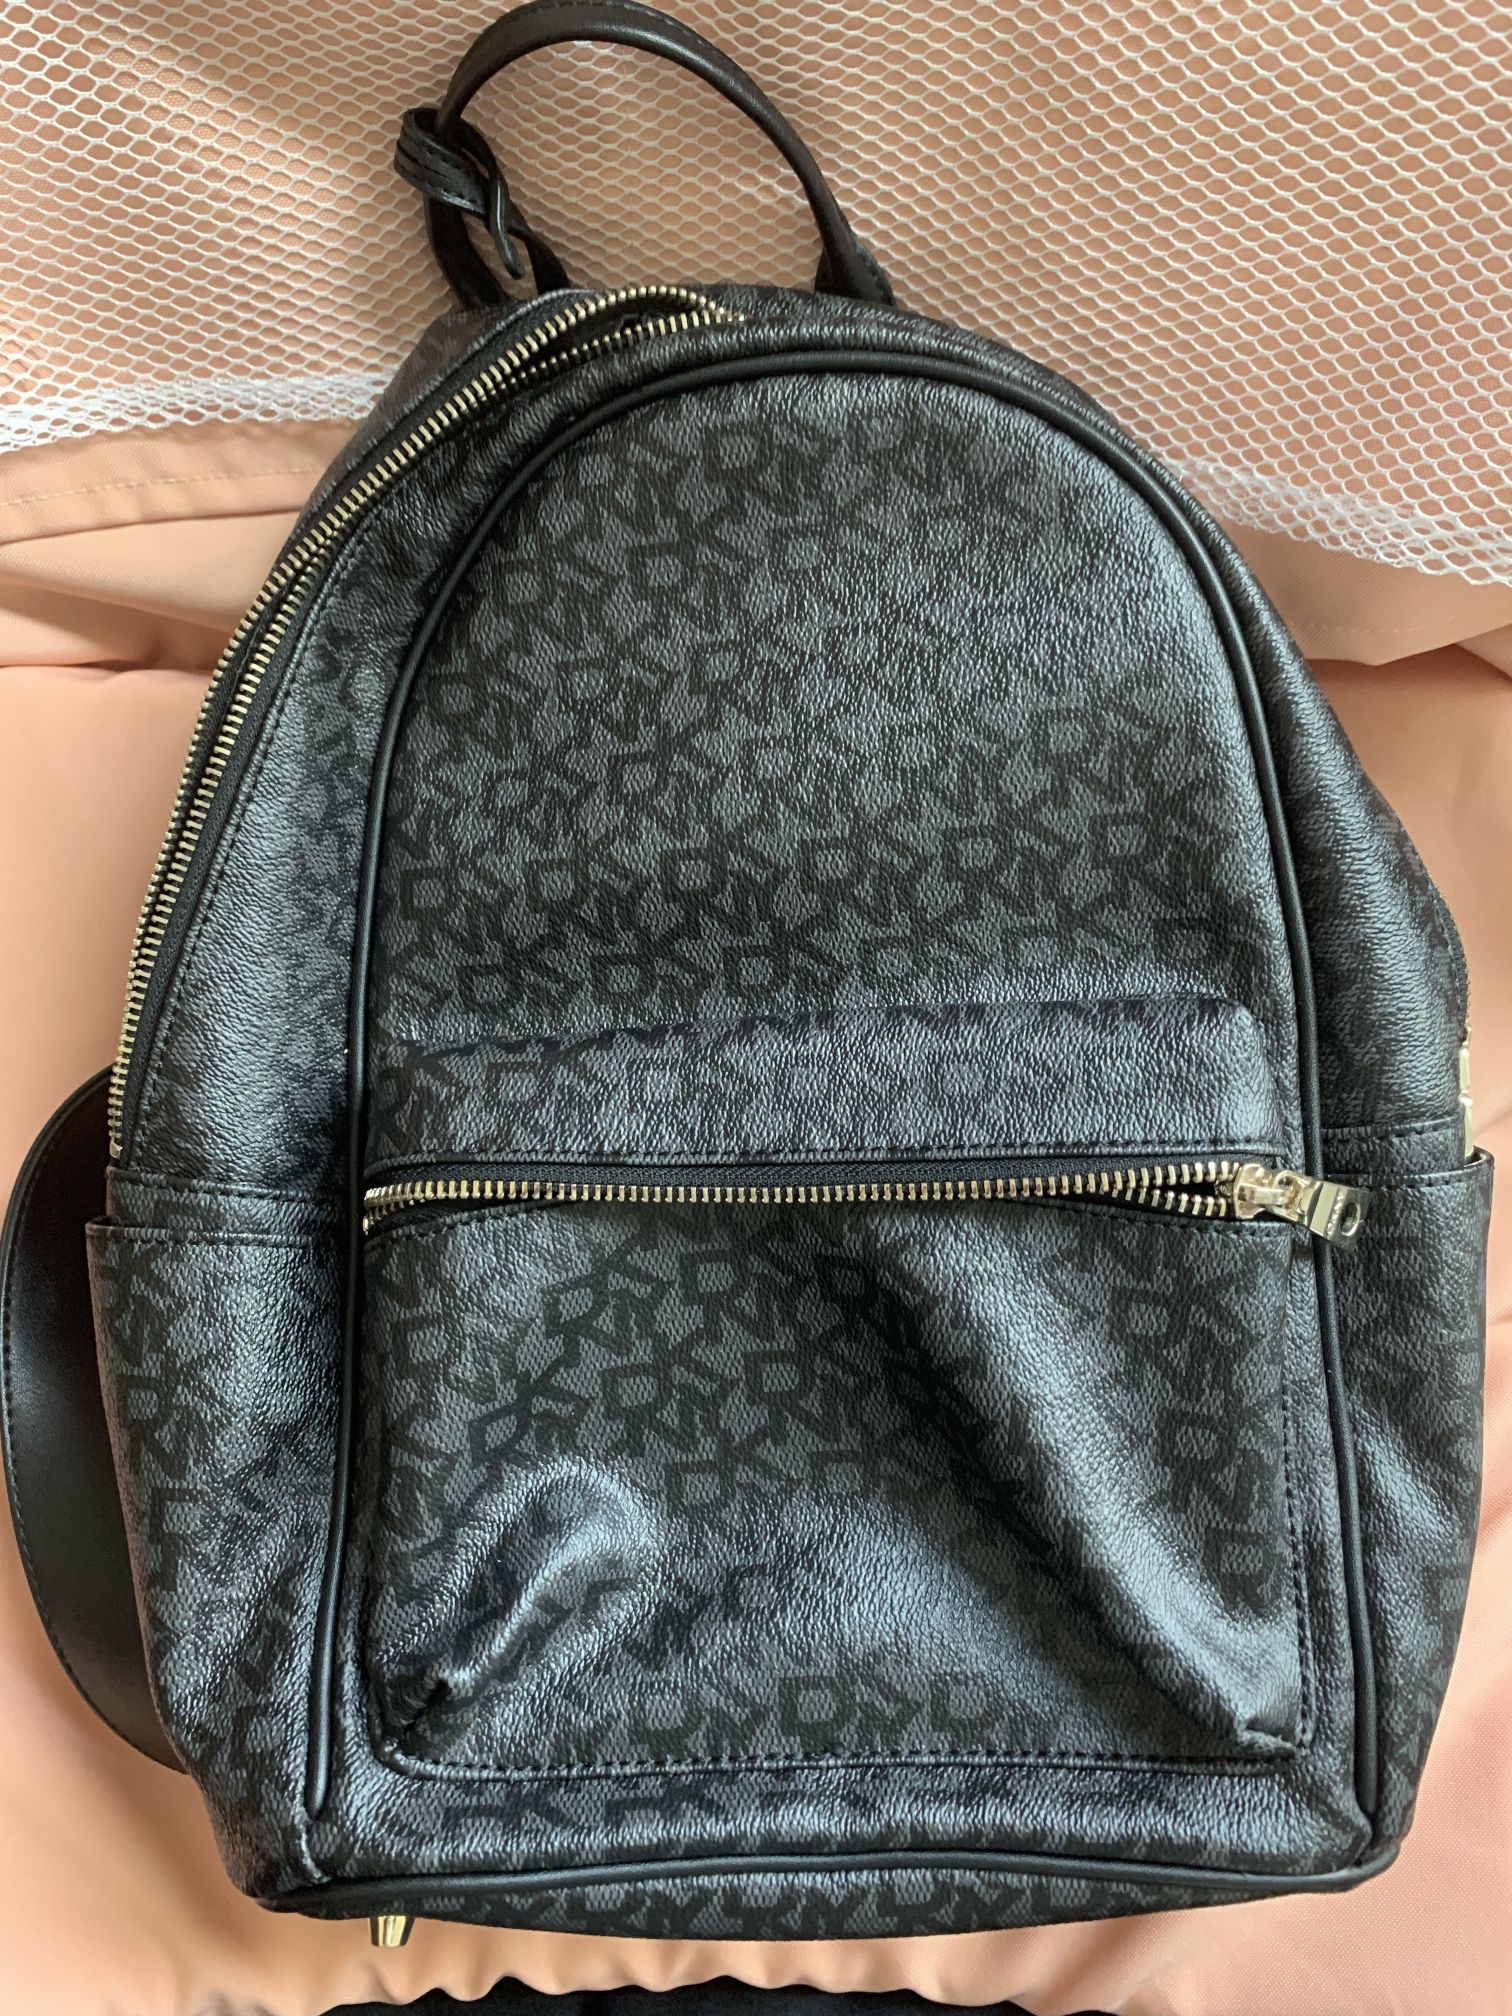 DKNY Black Backpack